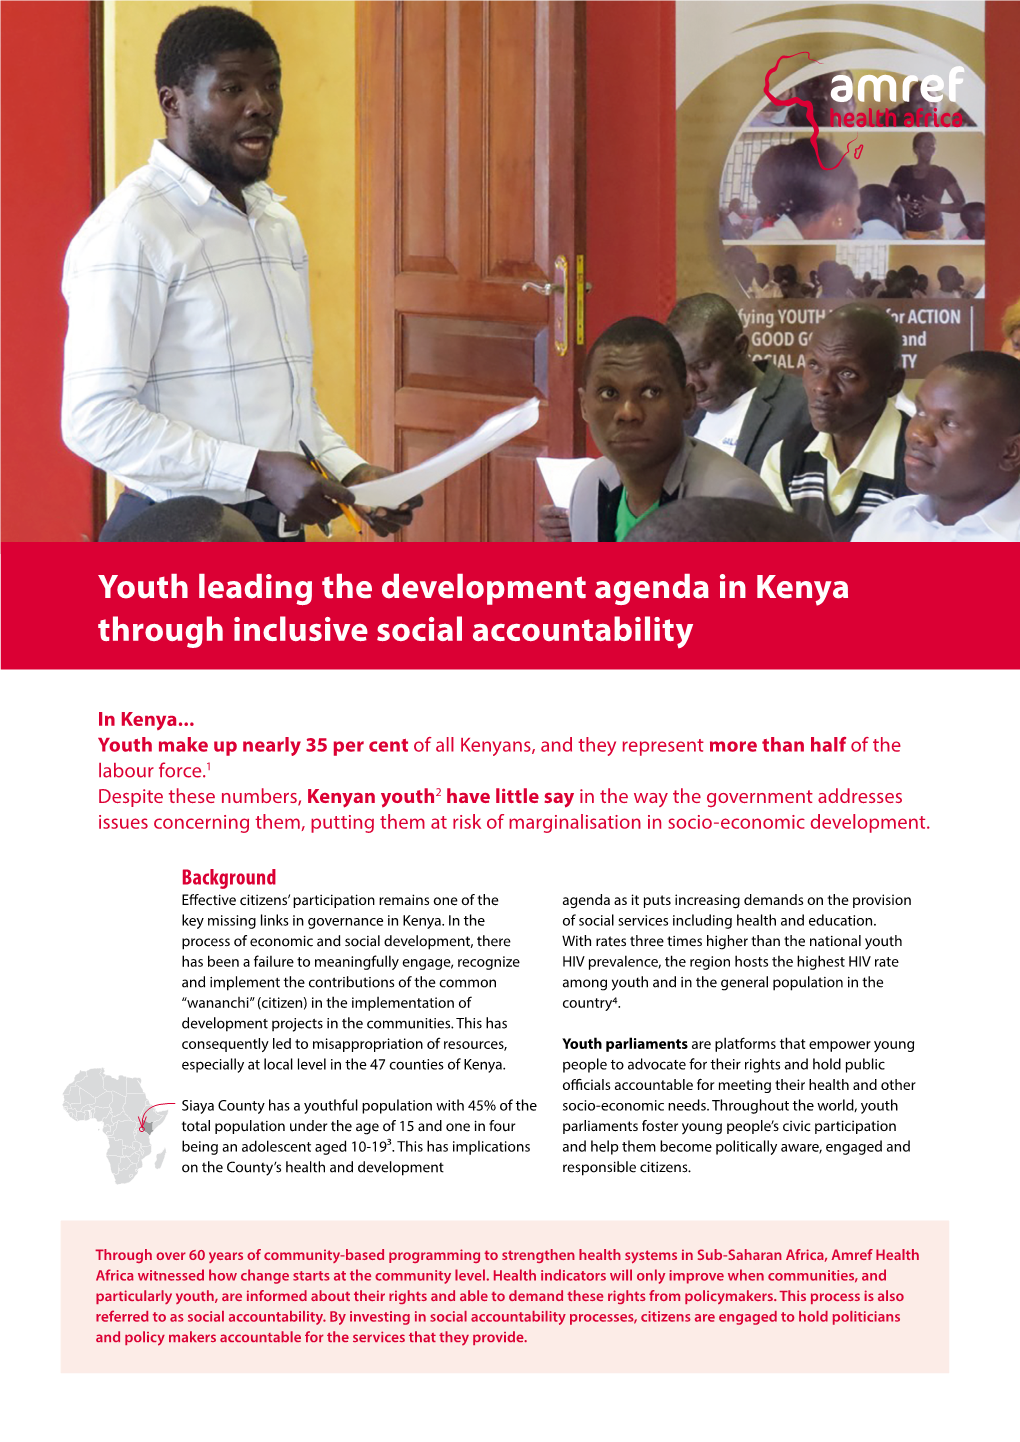 Youth Leading the Development Agenda in Kenya Through Inclusive Social Accountability